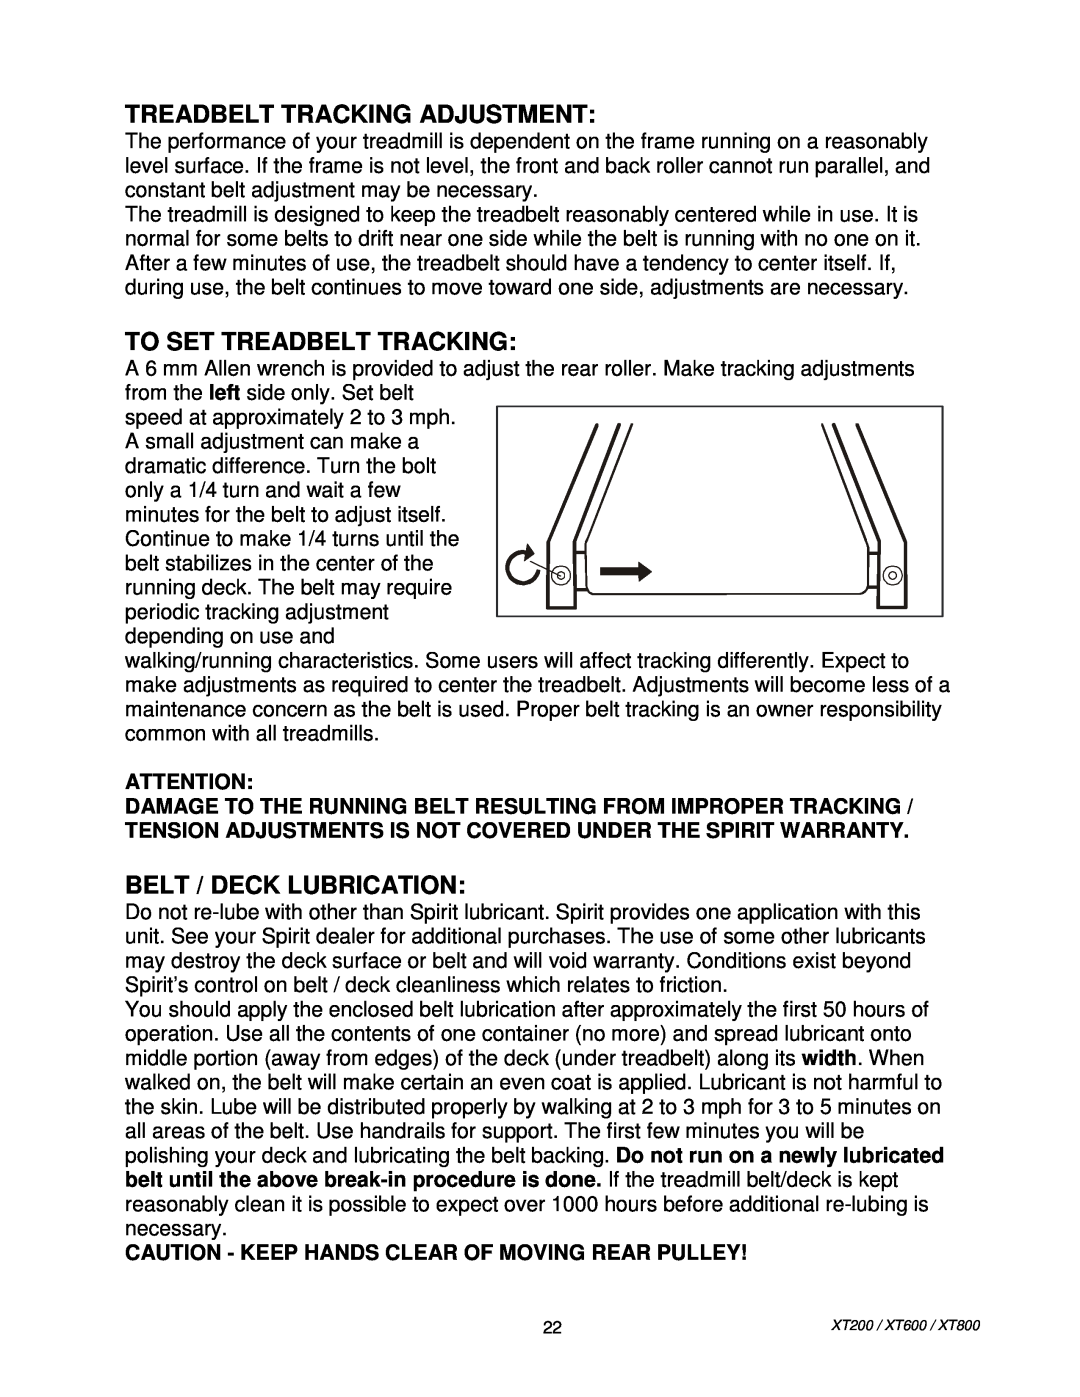 Spirit XT80013 manual Treadbelt Tracking Adjustment, To Set Treadbelt Tracking, Belt / Deck Lubrication 